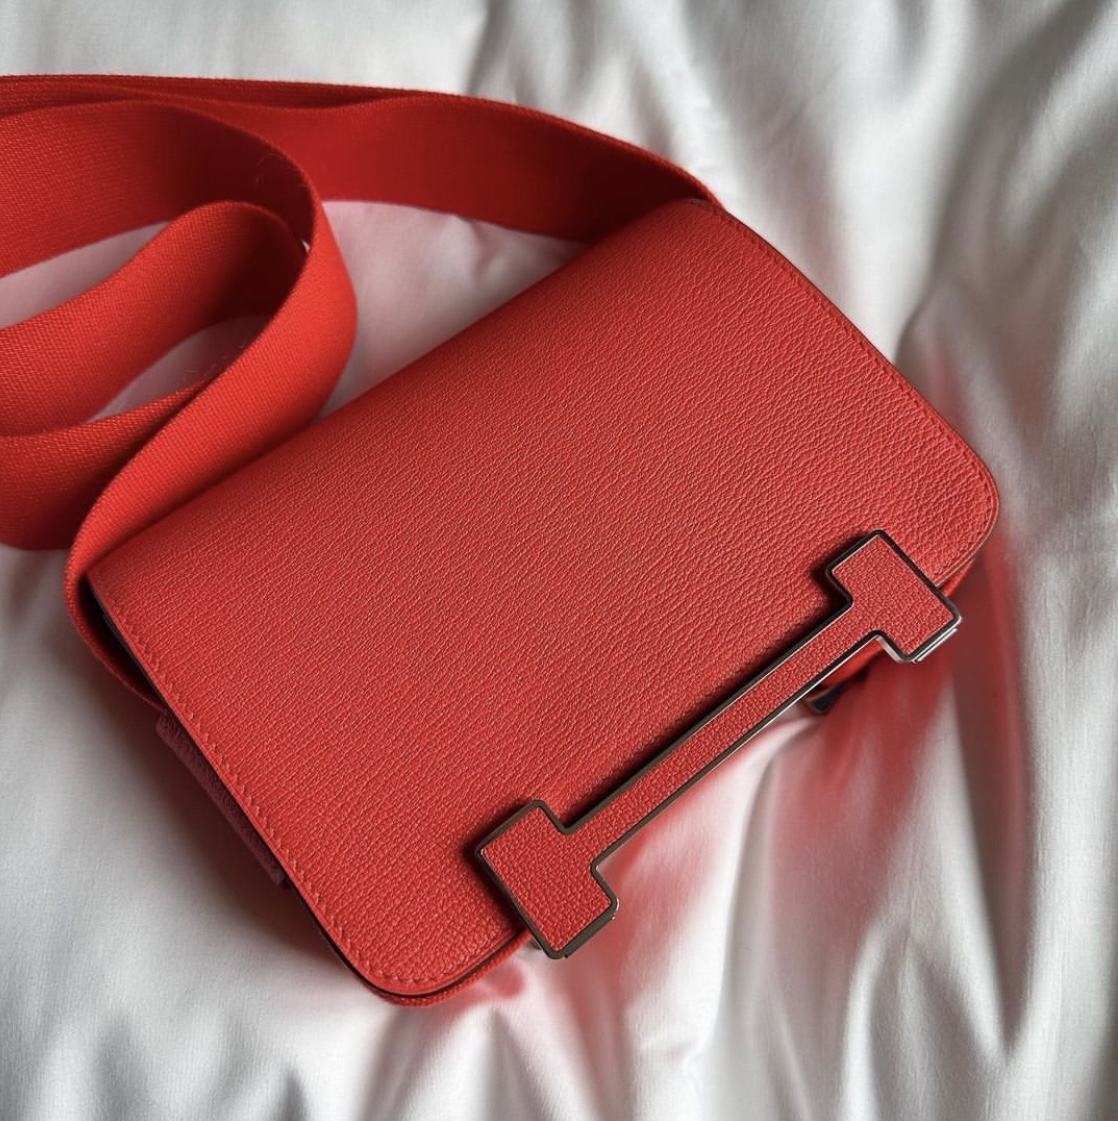 Hermès Introduces Five New Bags for S/S 2023 - PurseBop